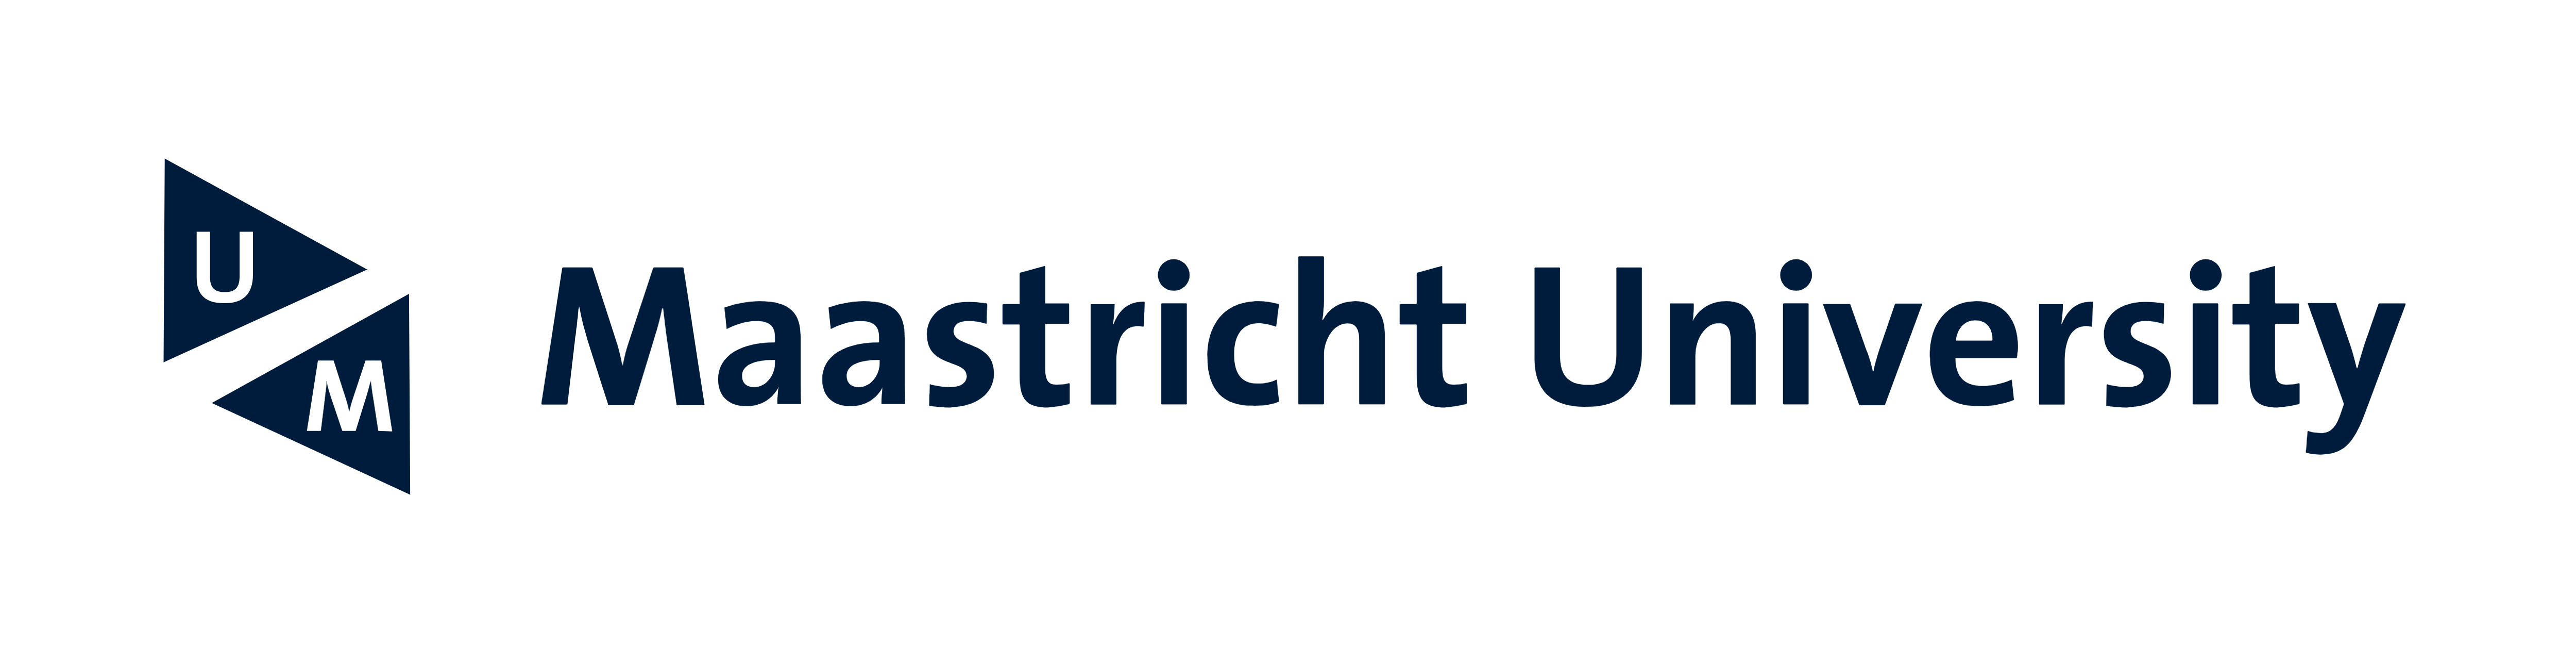 maastricht university presentation template